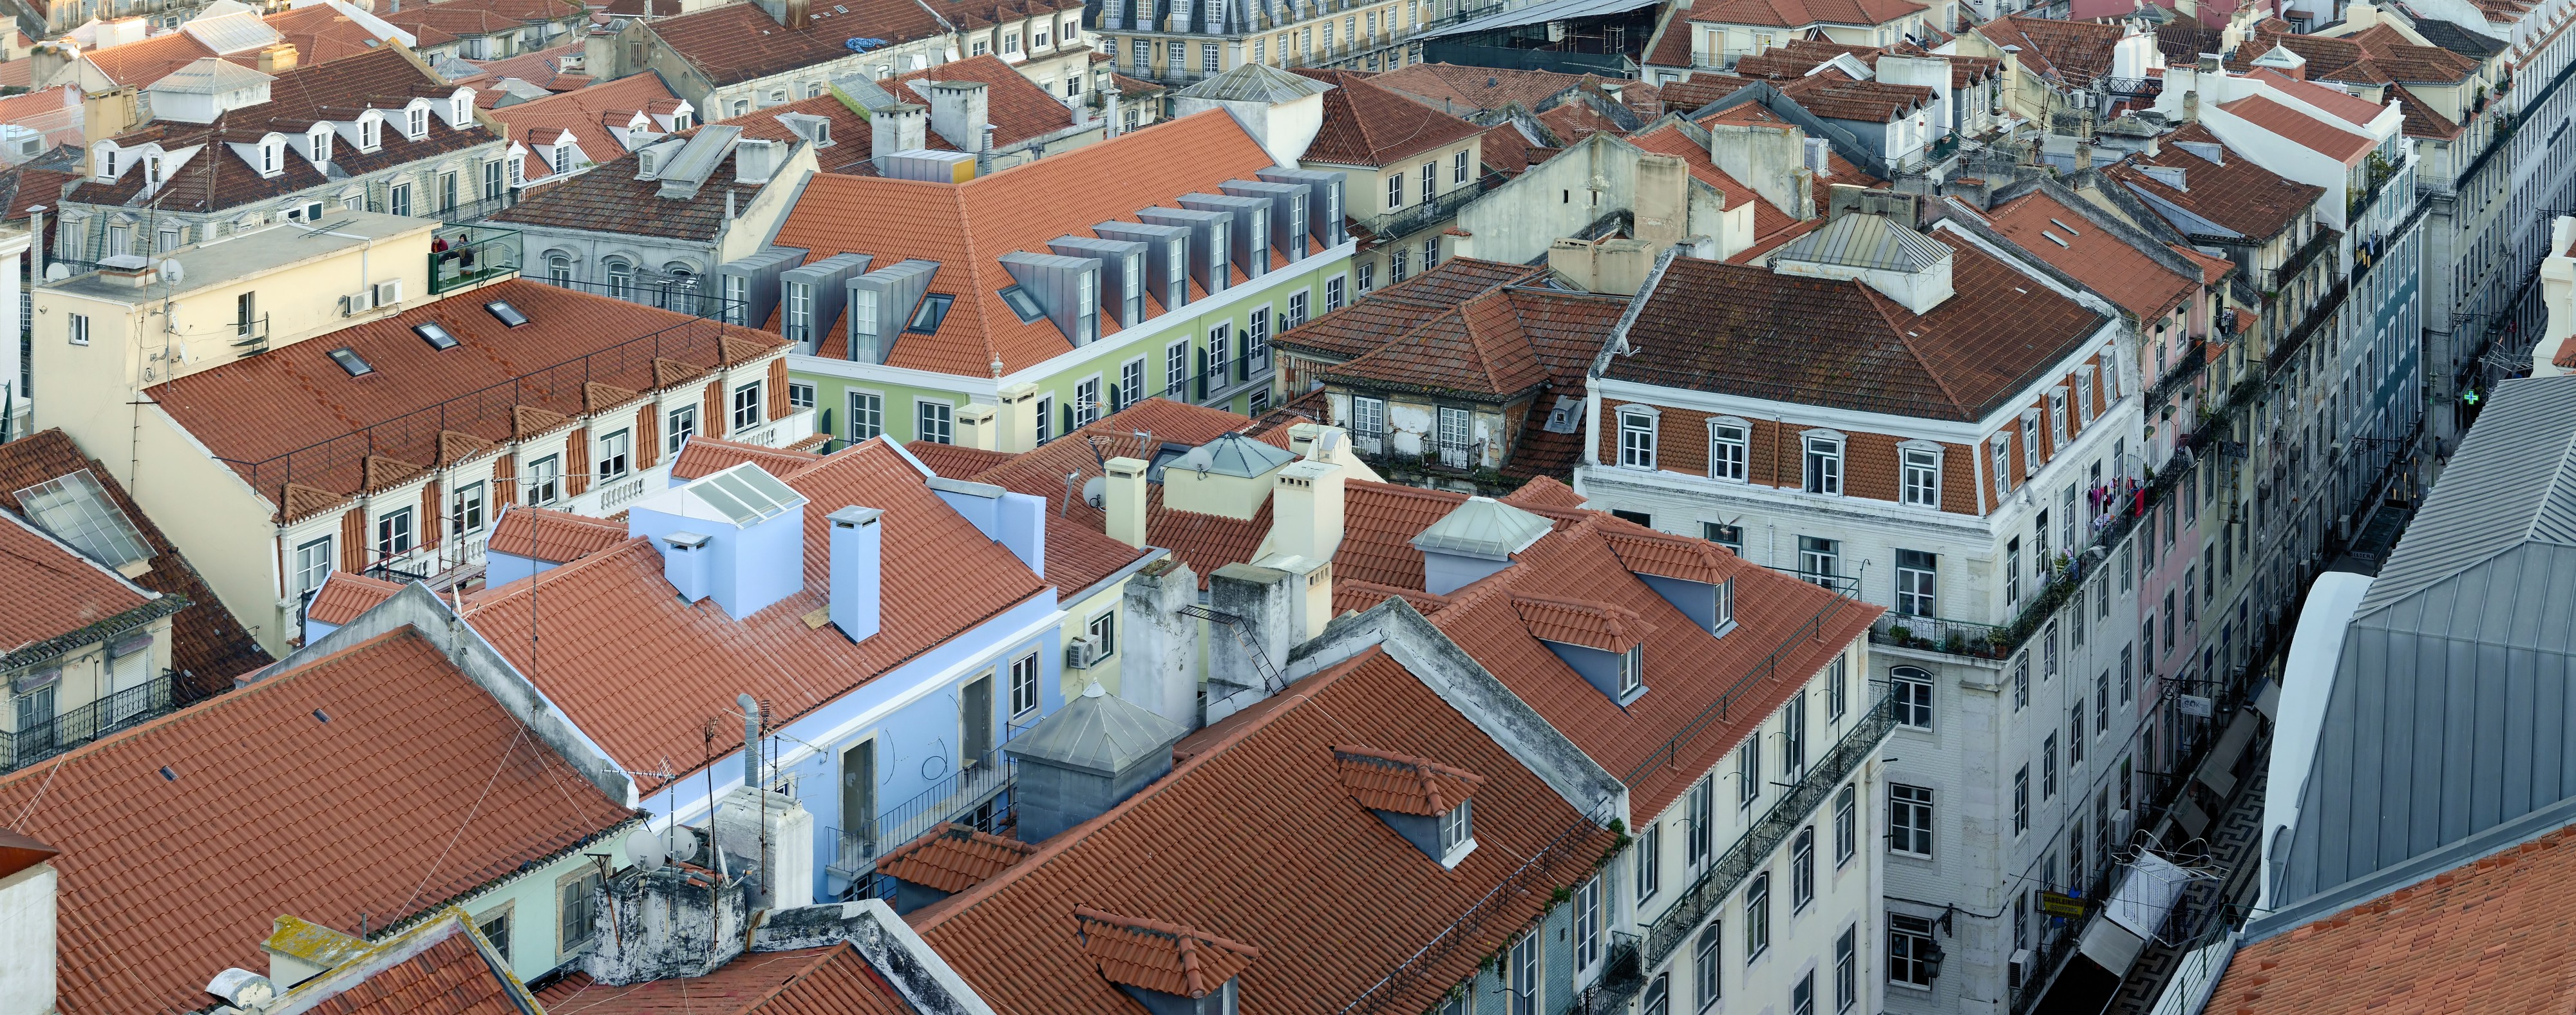 Lisboa January 2015-7a